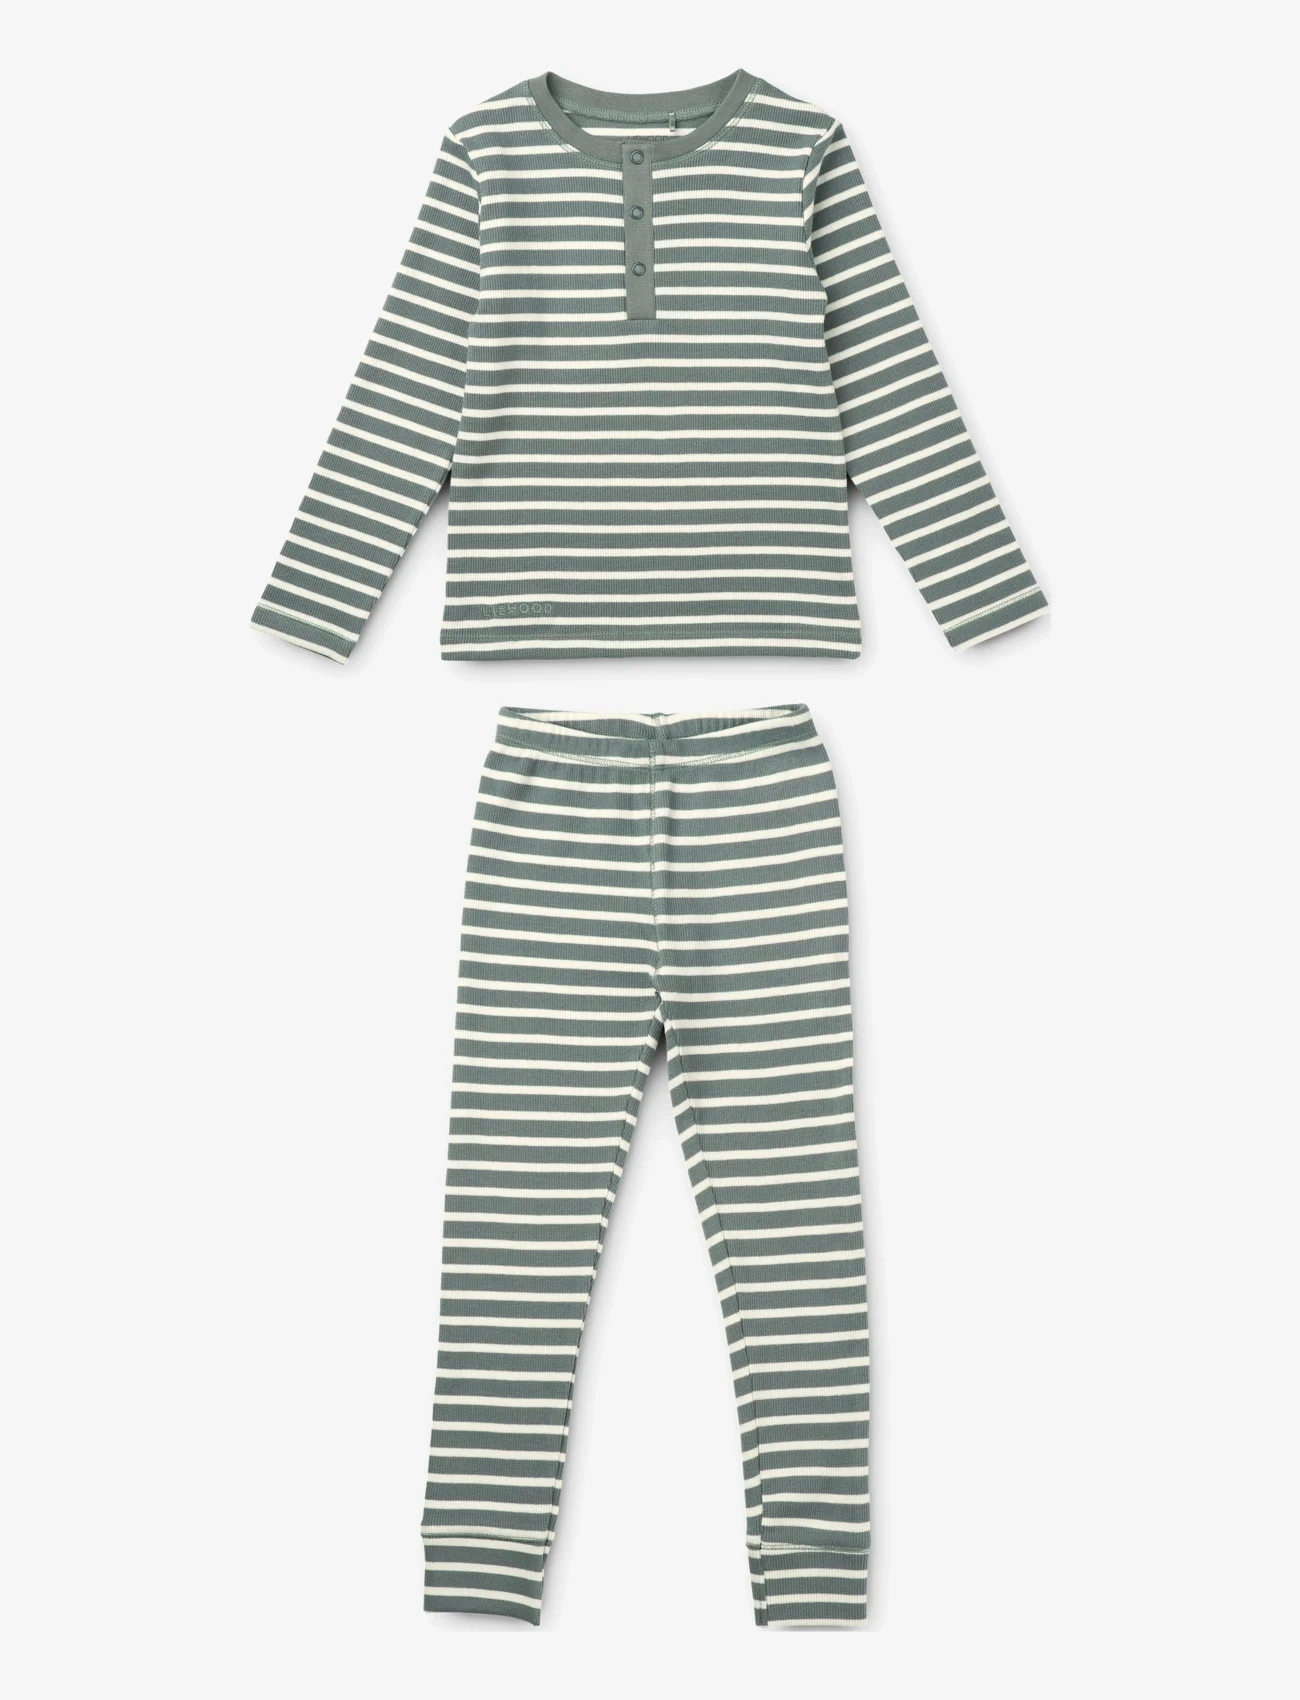 Liewood - Wilhelm pyjamas set - pyjamas - y/d stripe - 0